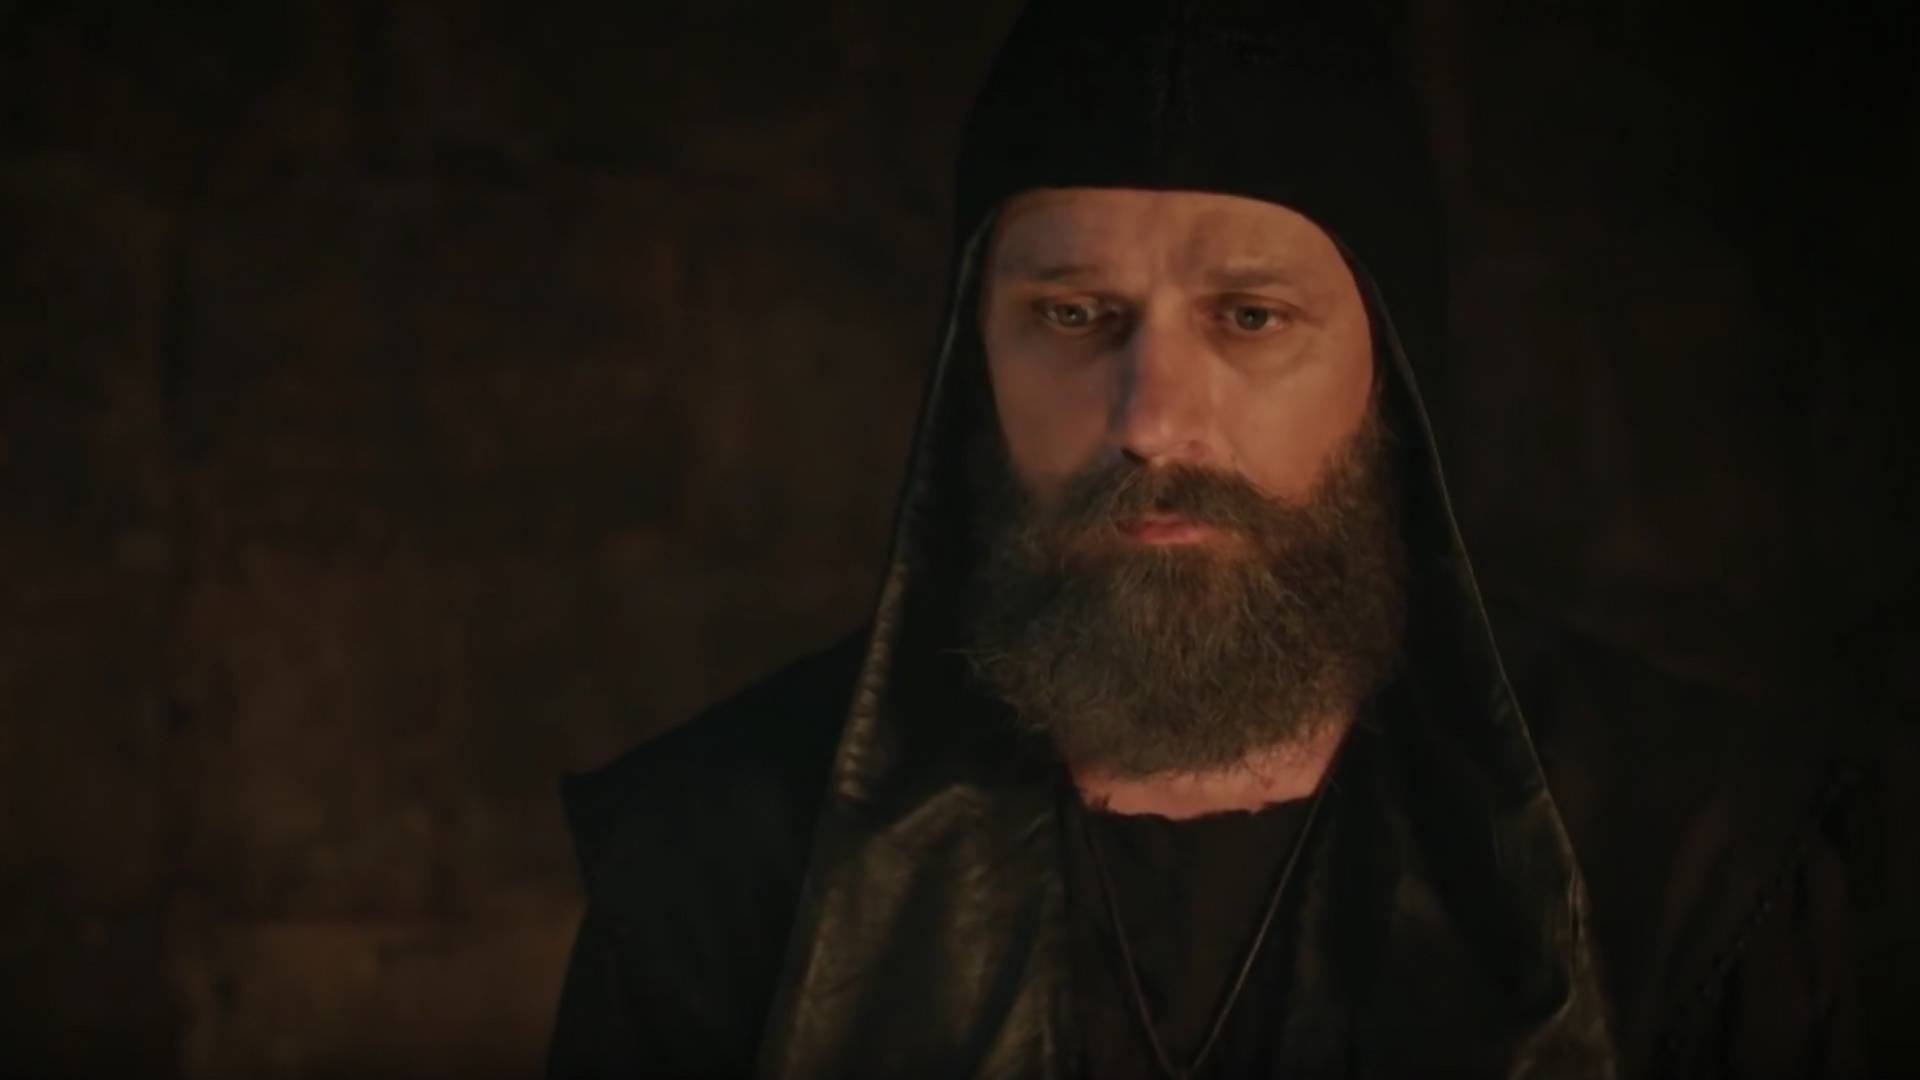 Nova epizoda "Nemanjića" je ličila na "Vikinge" - ali za siromašne